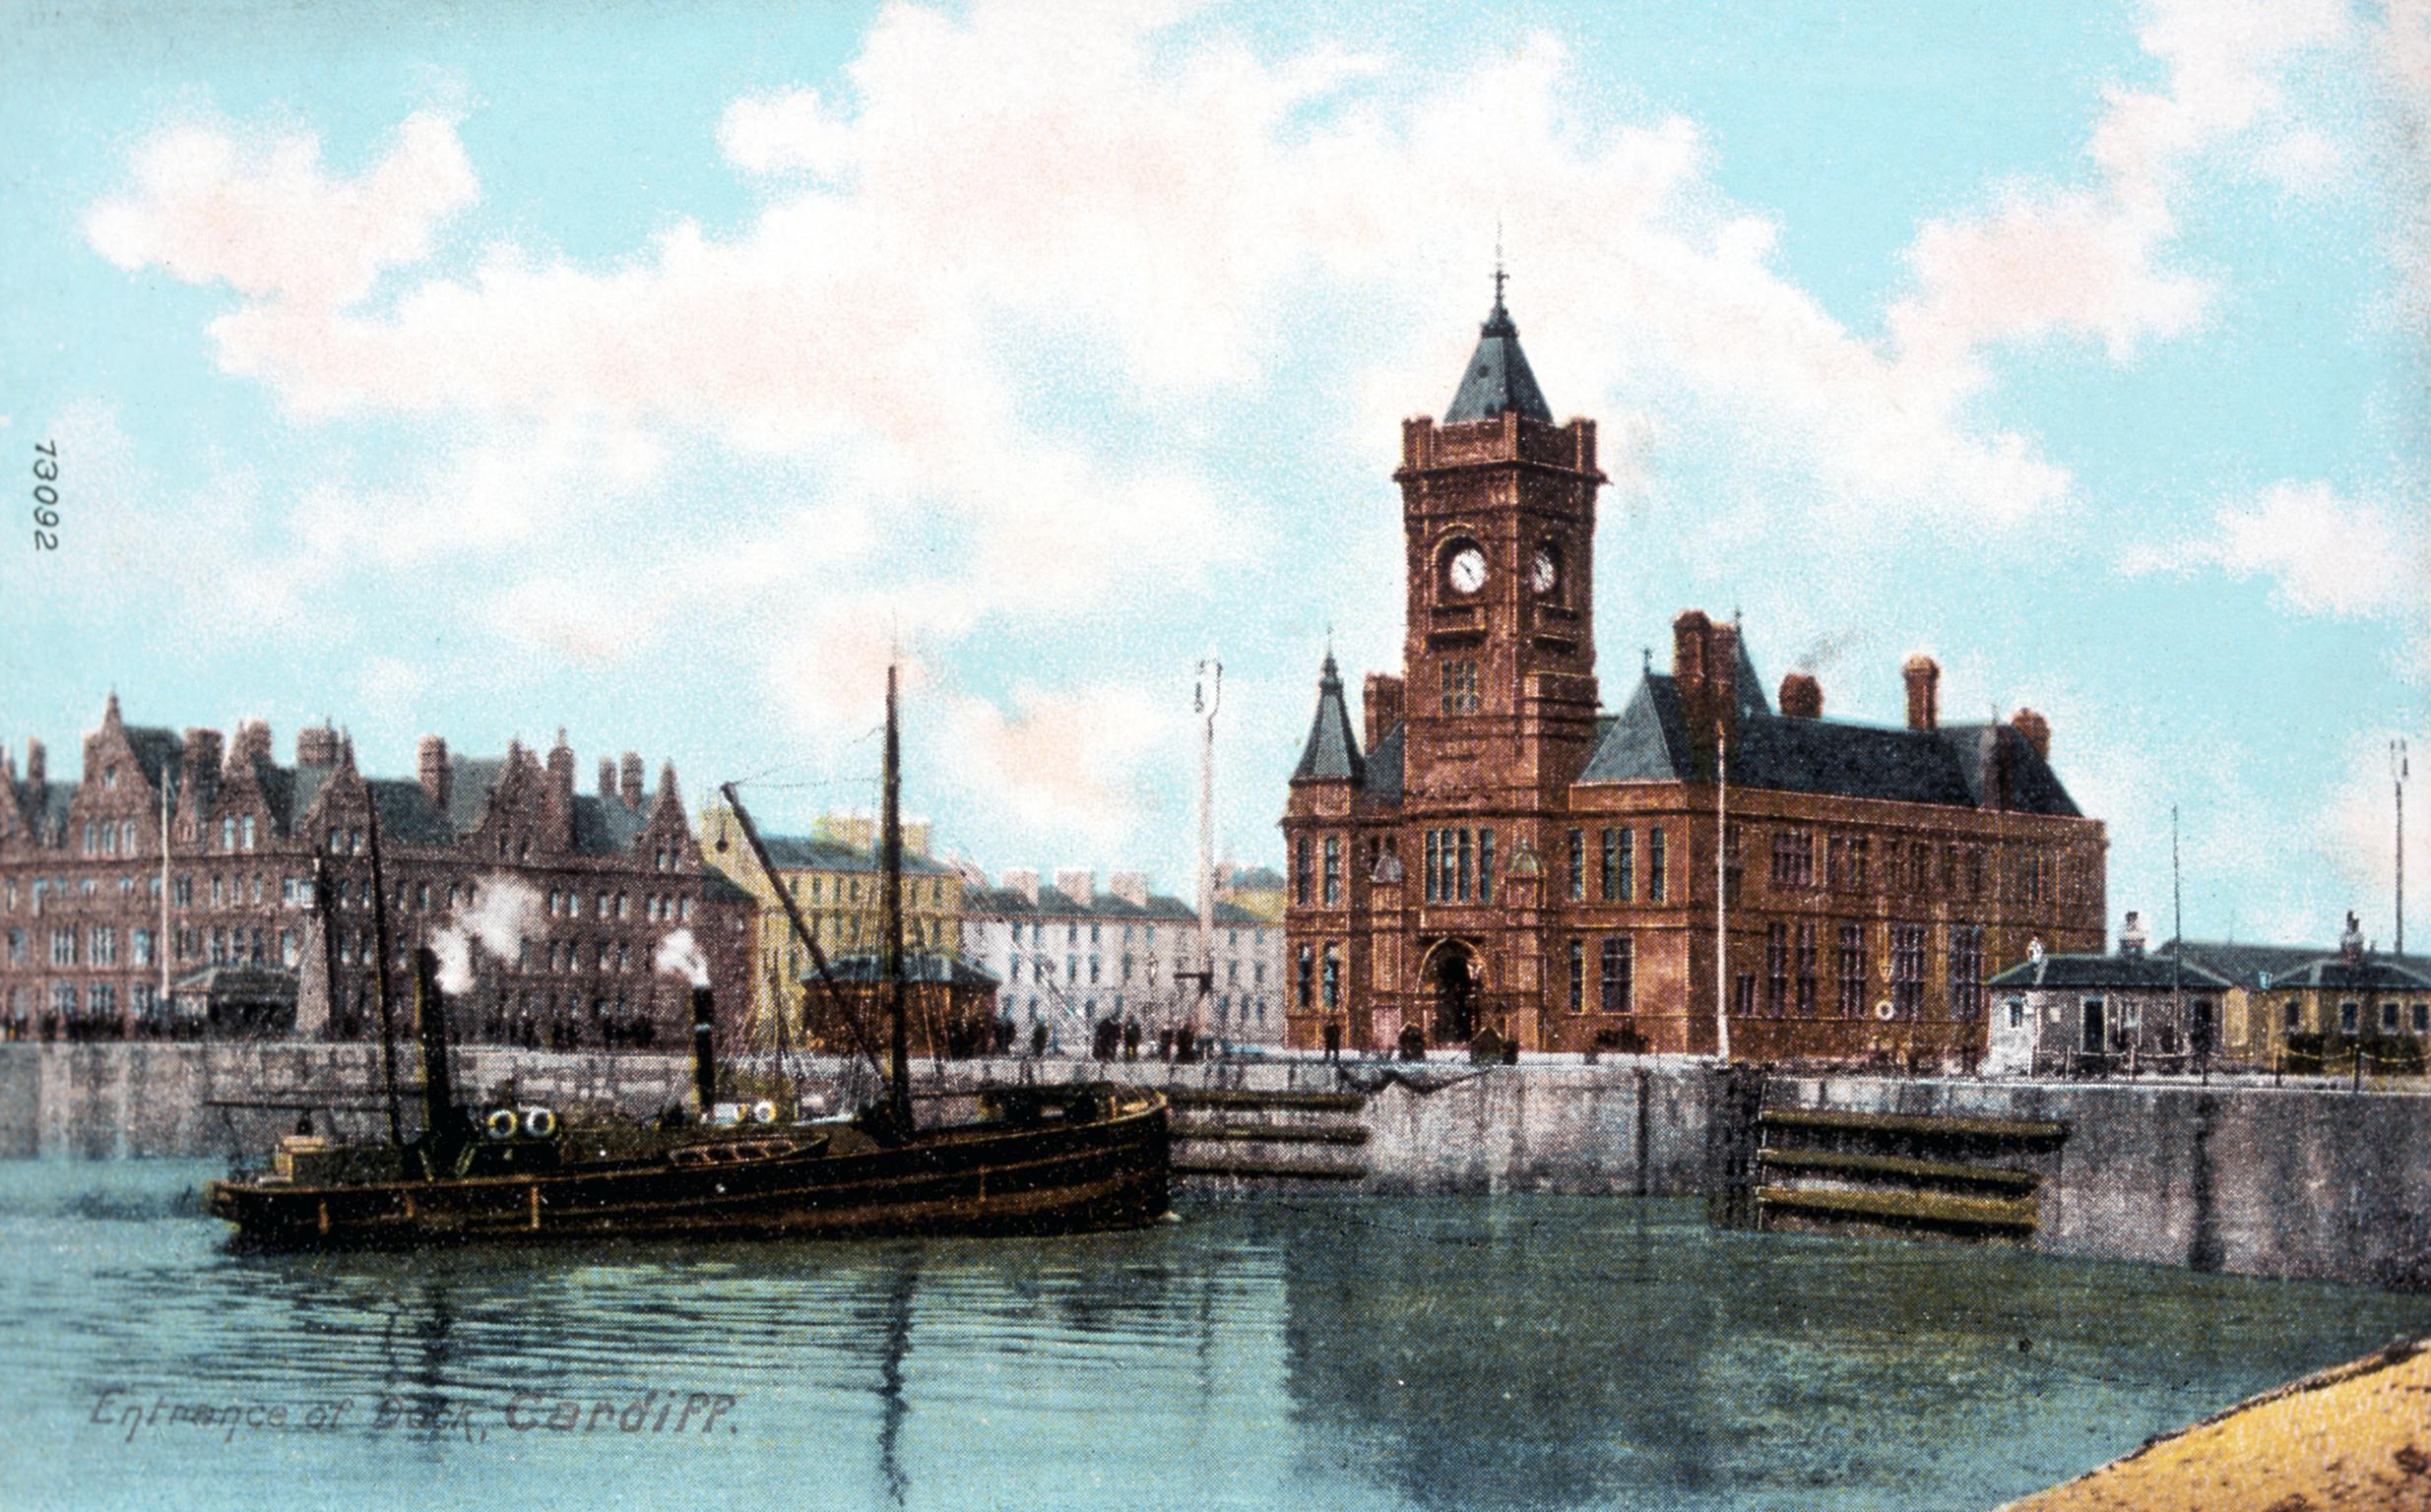 Entrance of Dock, Cardiff (postcard)